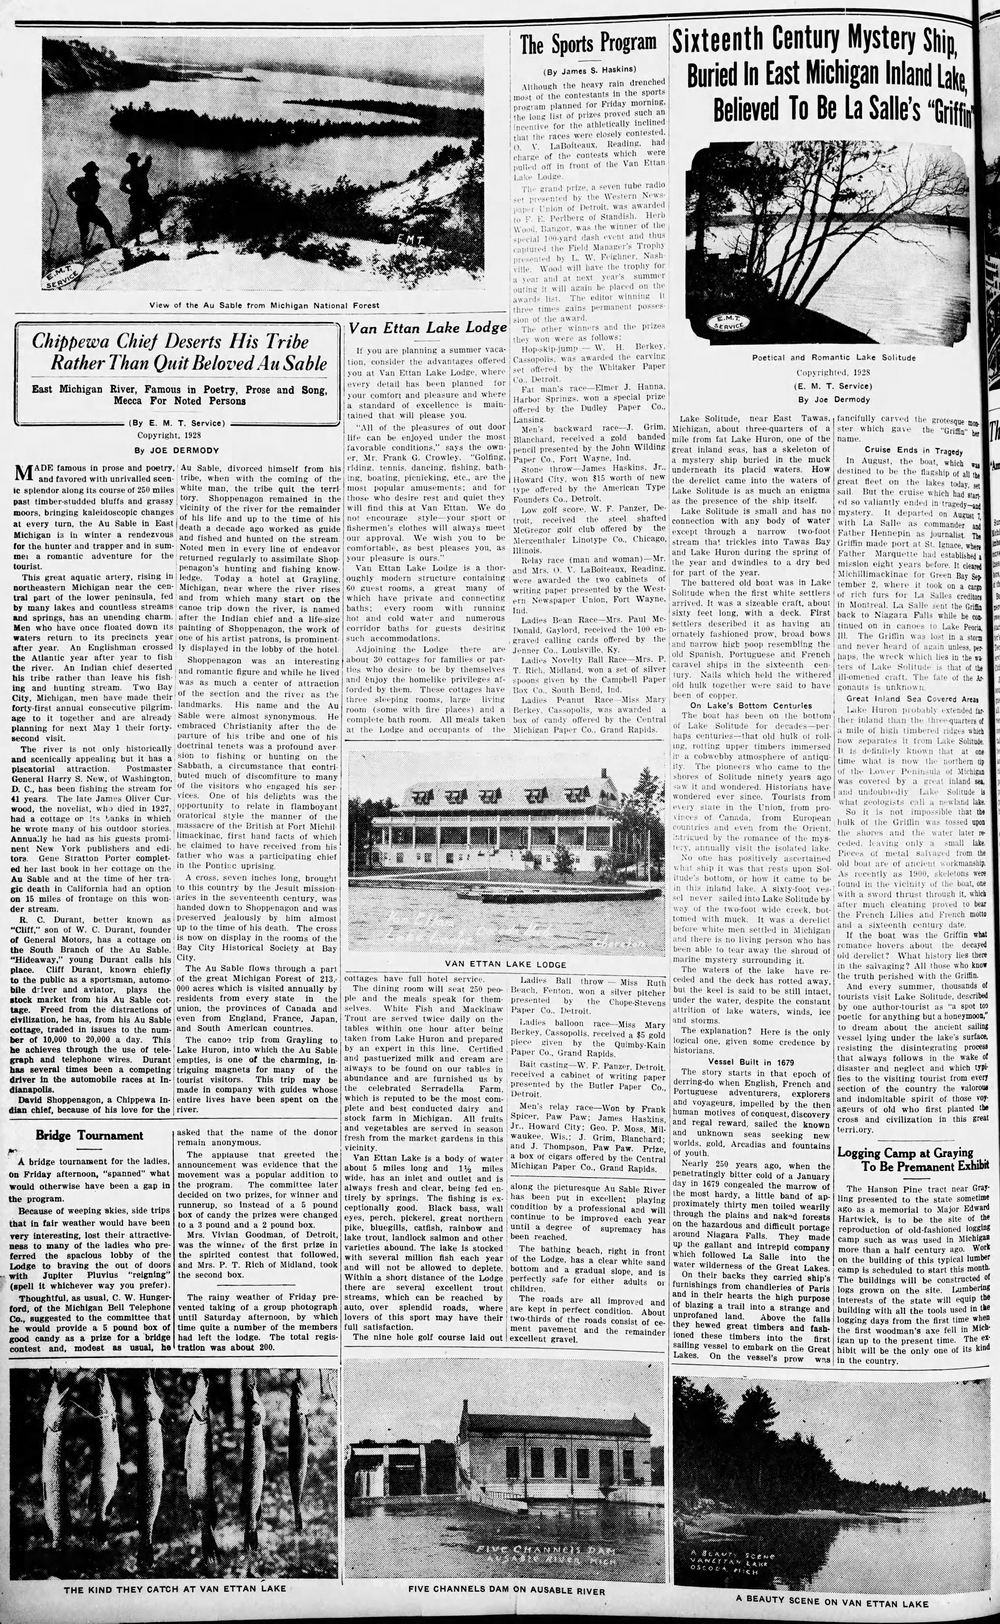 Van Ettan Lake Lodge (Van Etten Lake Lodge) - Jul 12 1928 Article On Area